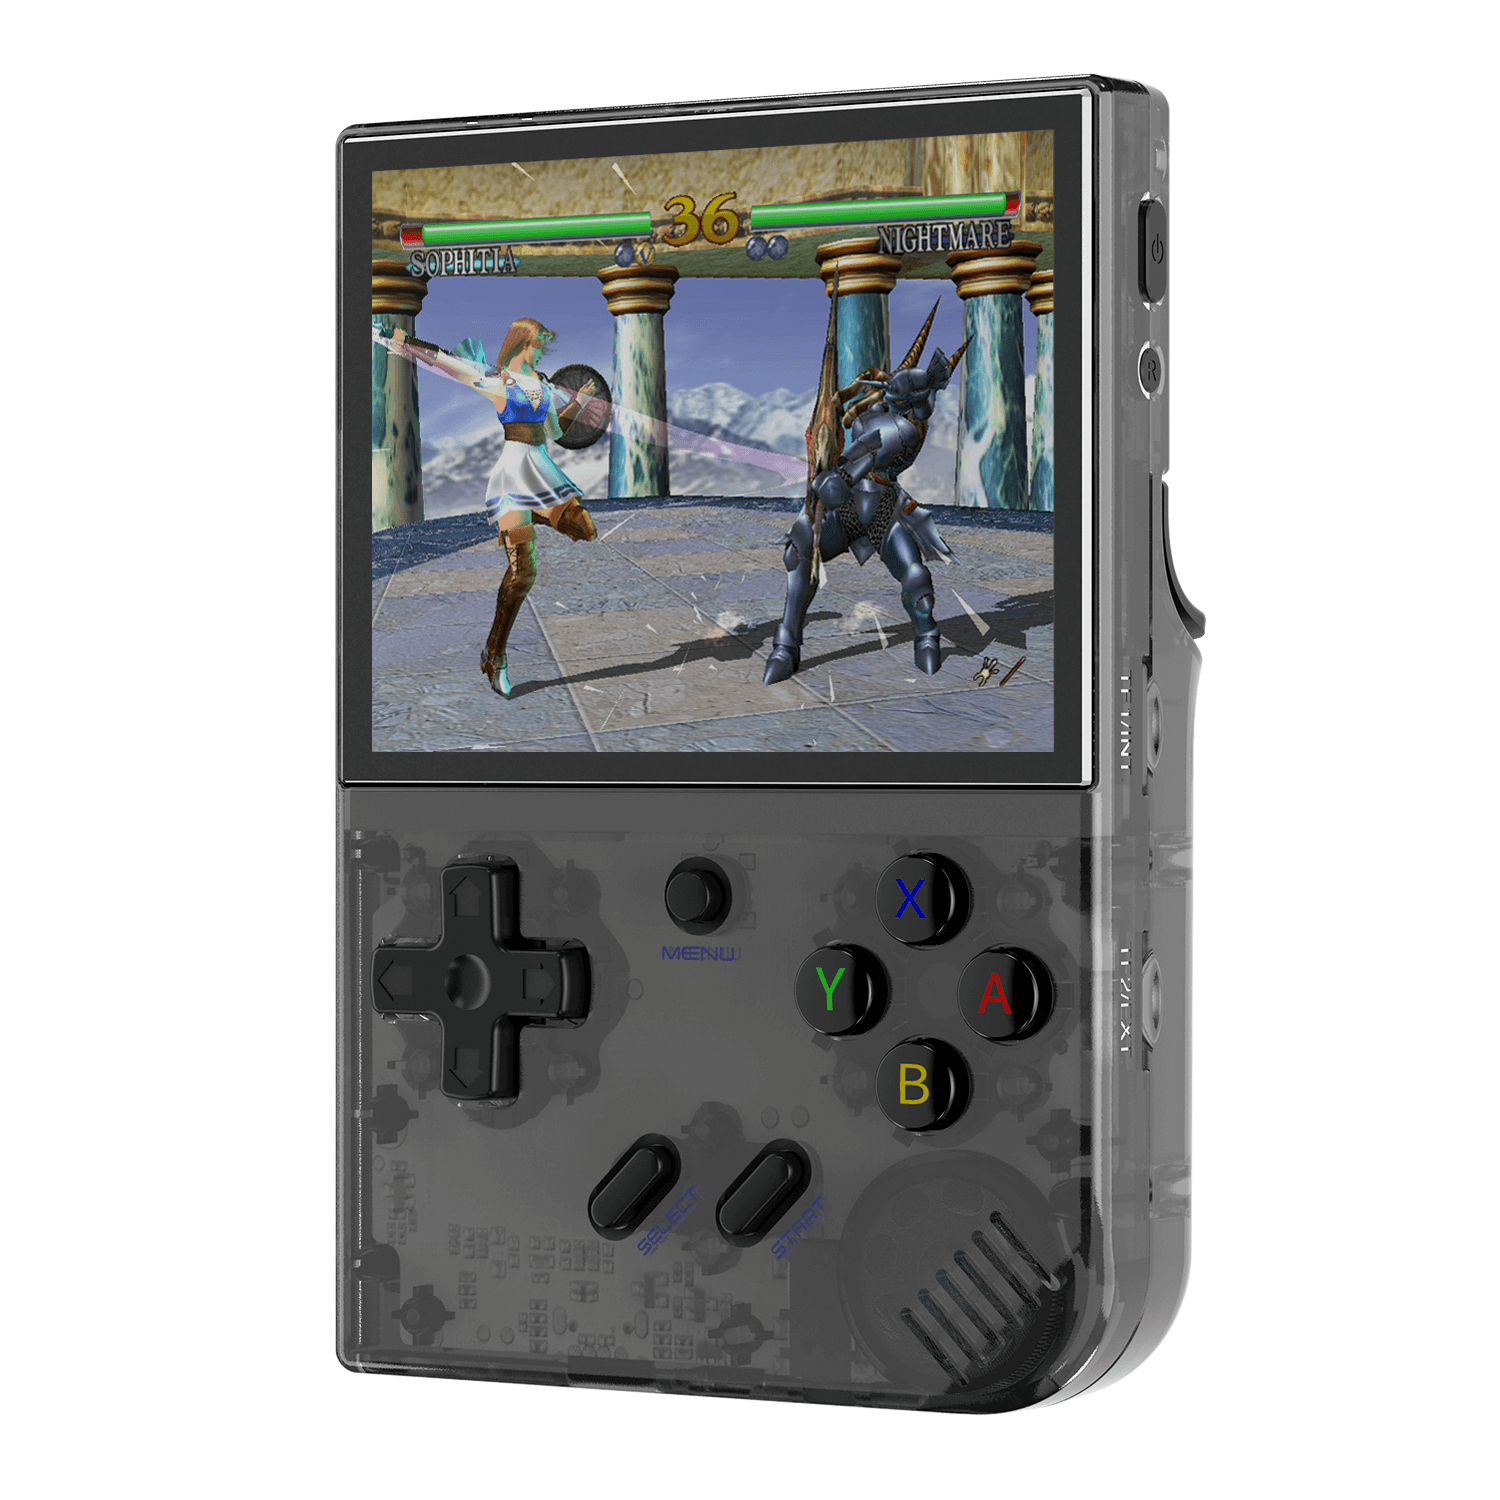 ANBERNIC RG35XX Plus Retro Handheld Gaming Console